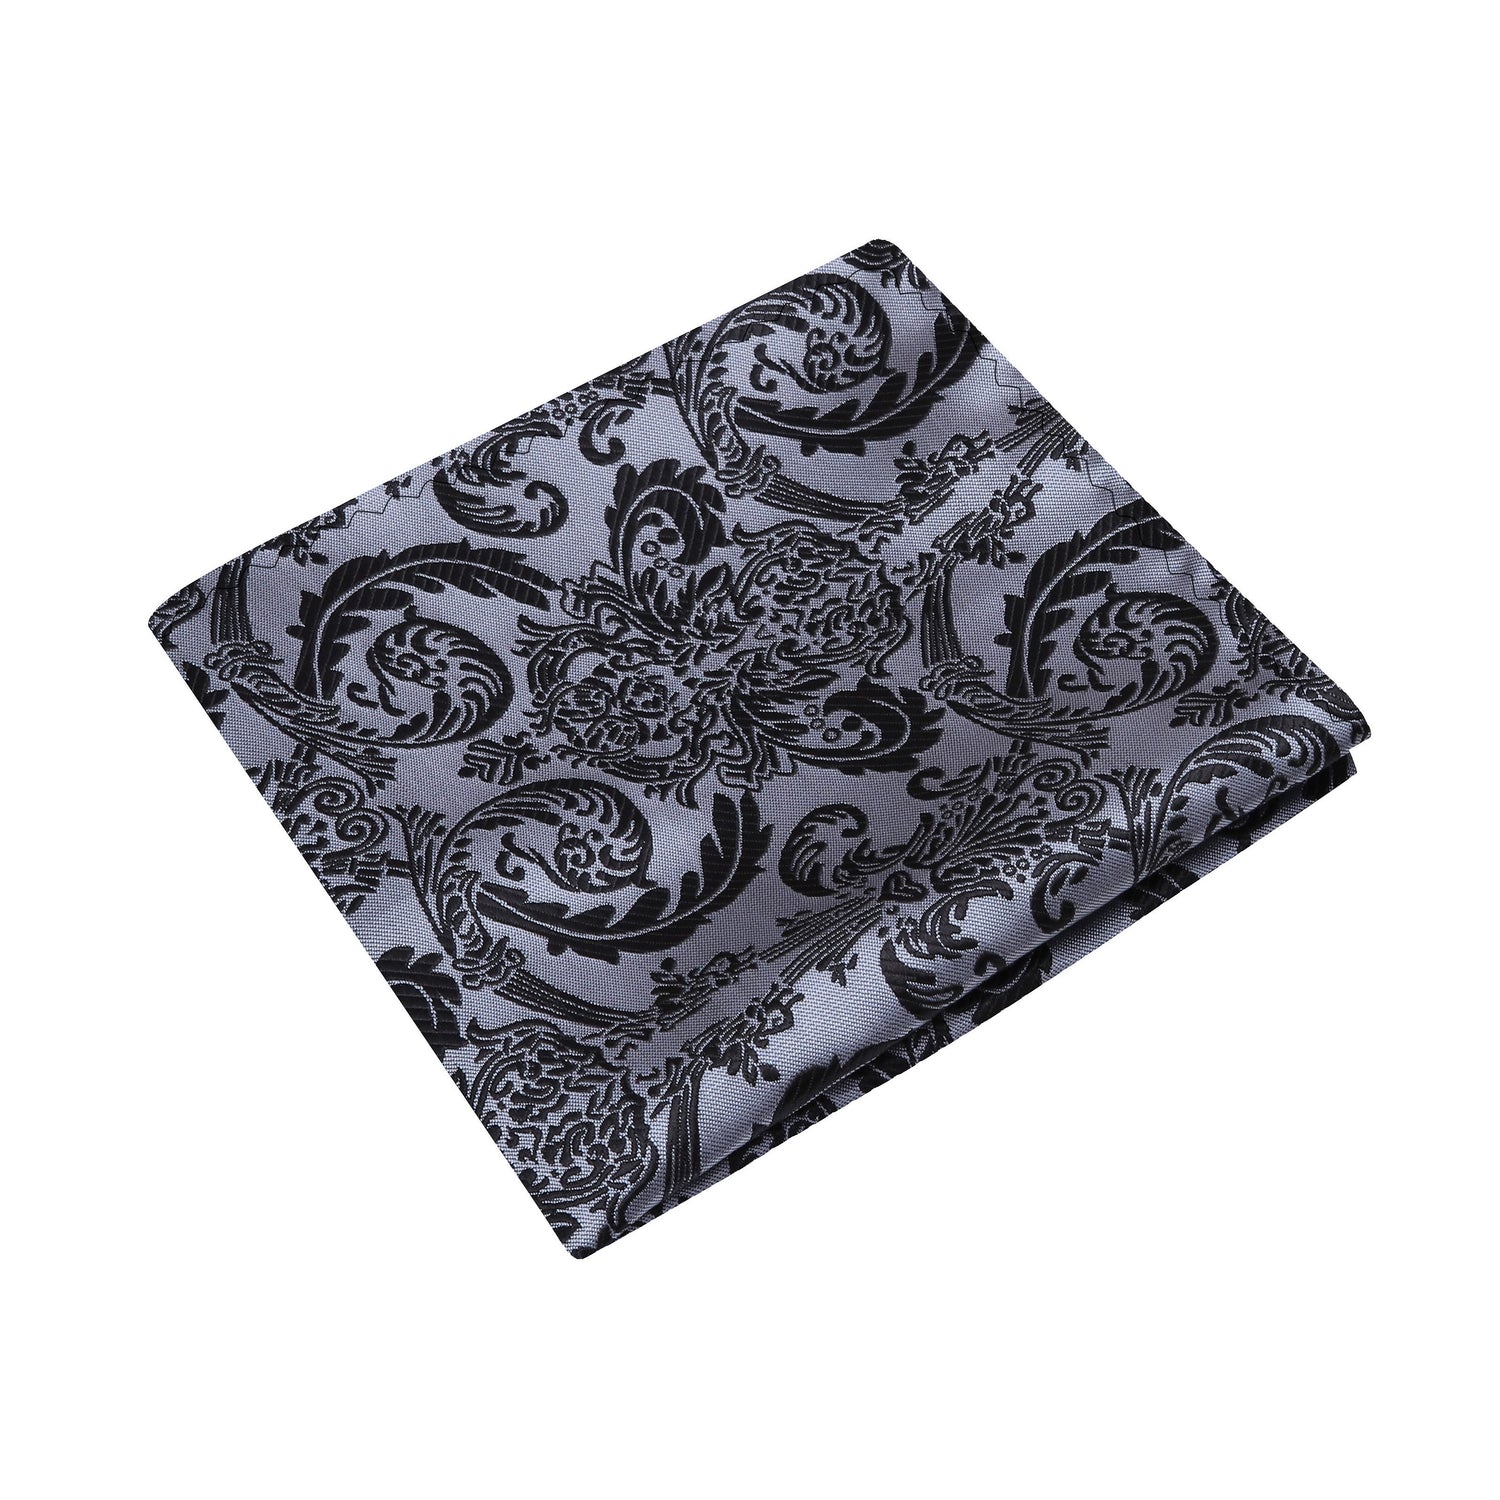 A Silver, Black Intricate Floral Pattern Silk Pocket Square